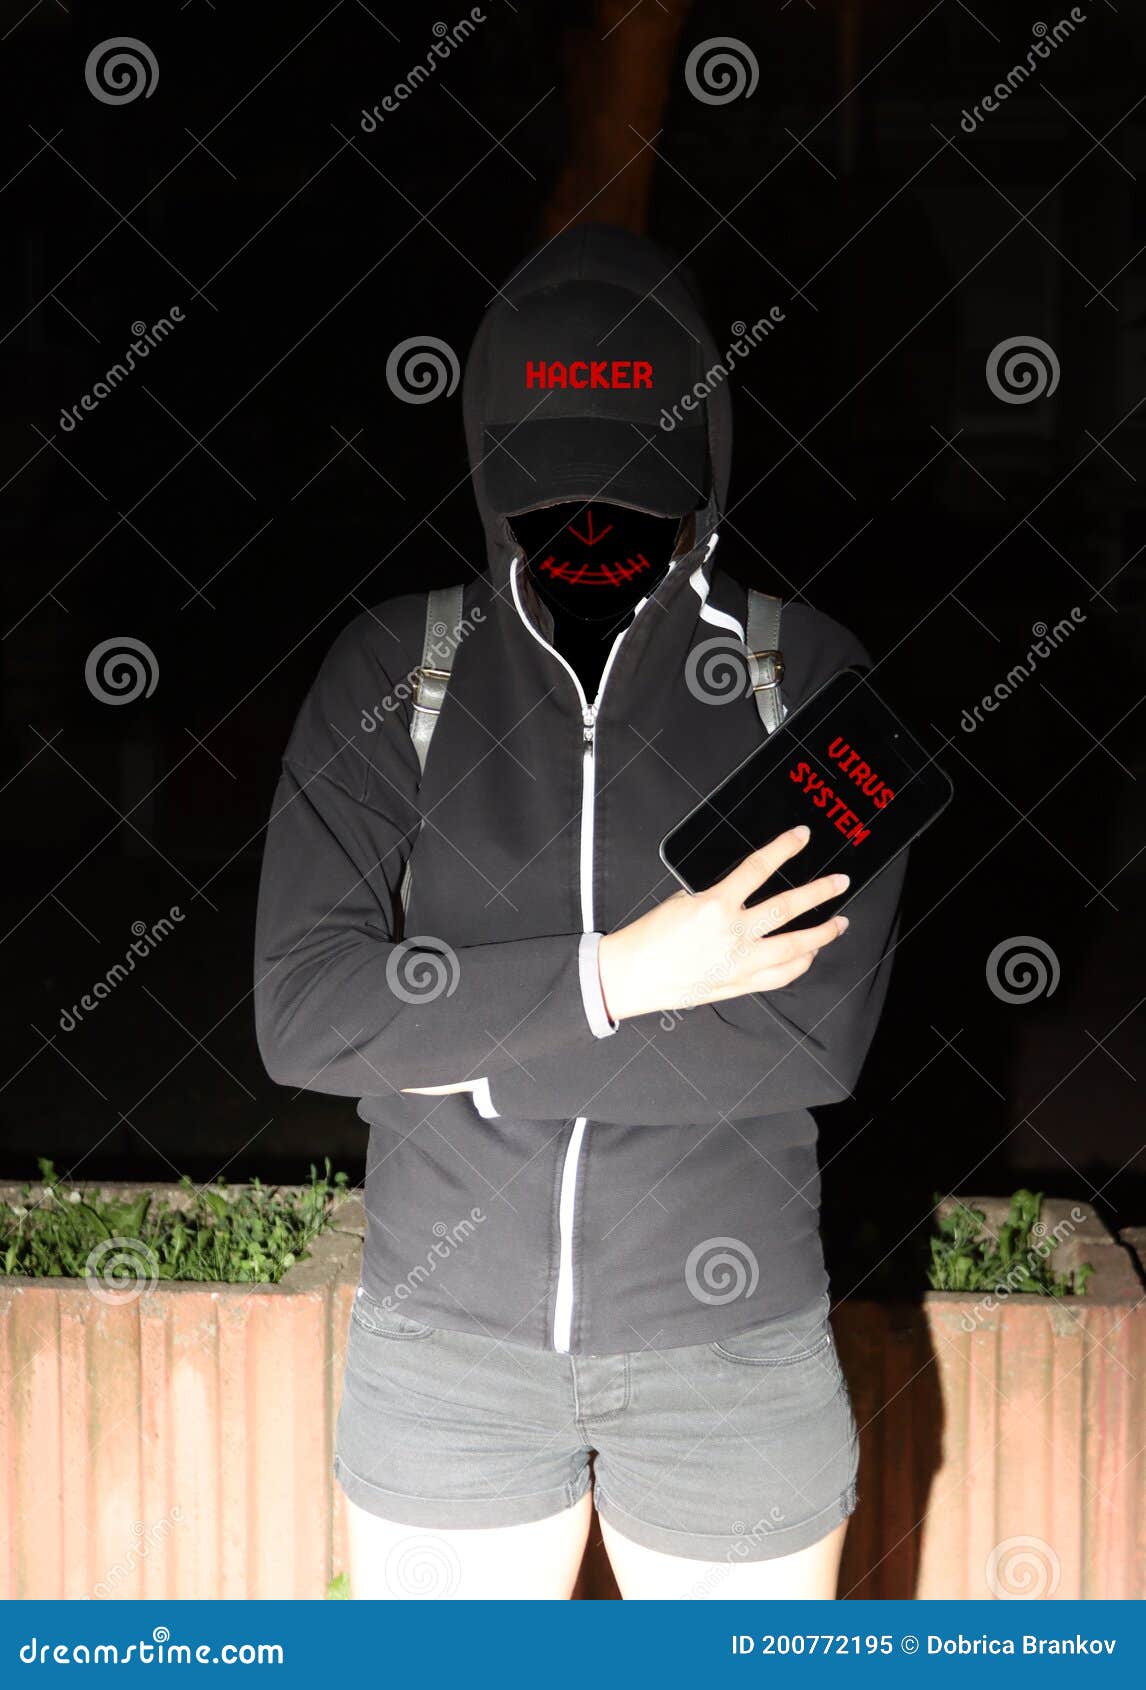 Hacker in Dark Black Clothes. Stock Image - Image of hackerswe, danger:  200772195